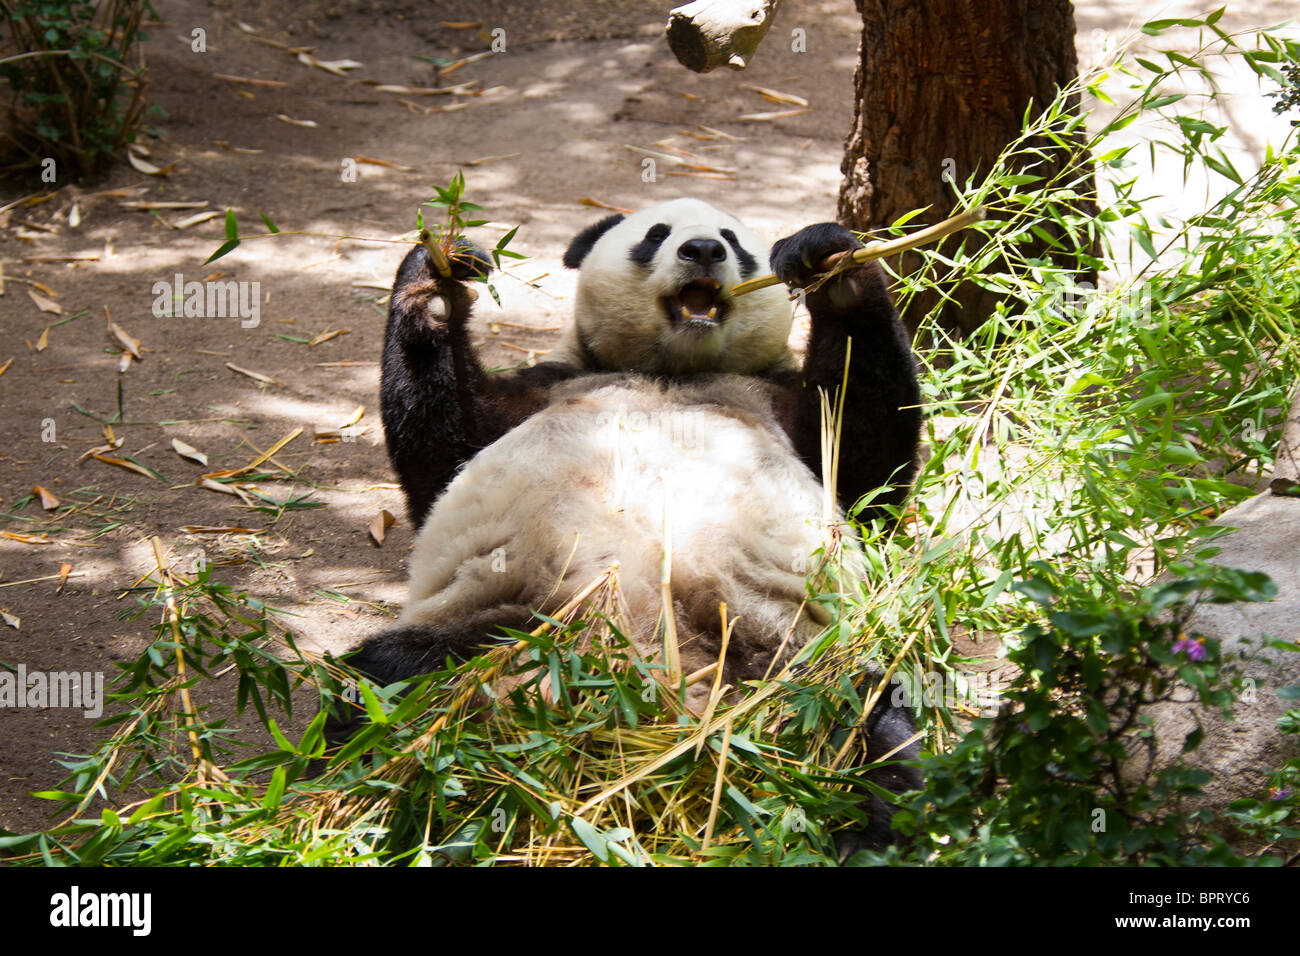 A Giant panda (Ailuropoda melanoleuca) bear on its back eating bamboo, San Diego Zoo, San Diego, California Stock Photo